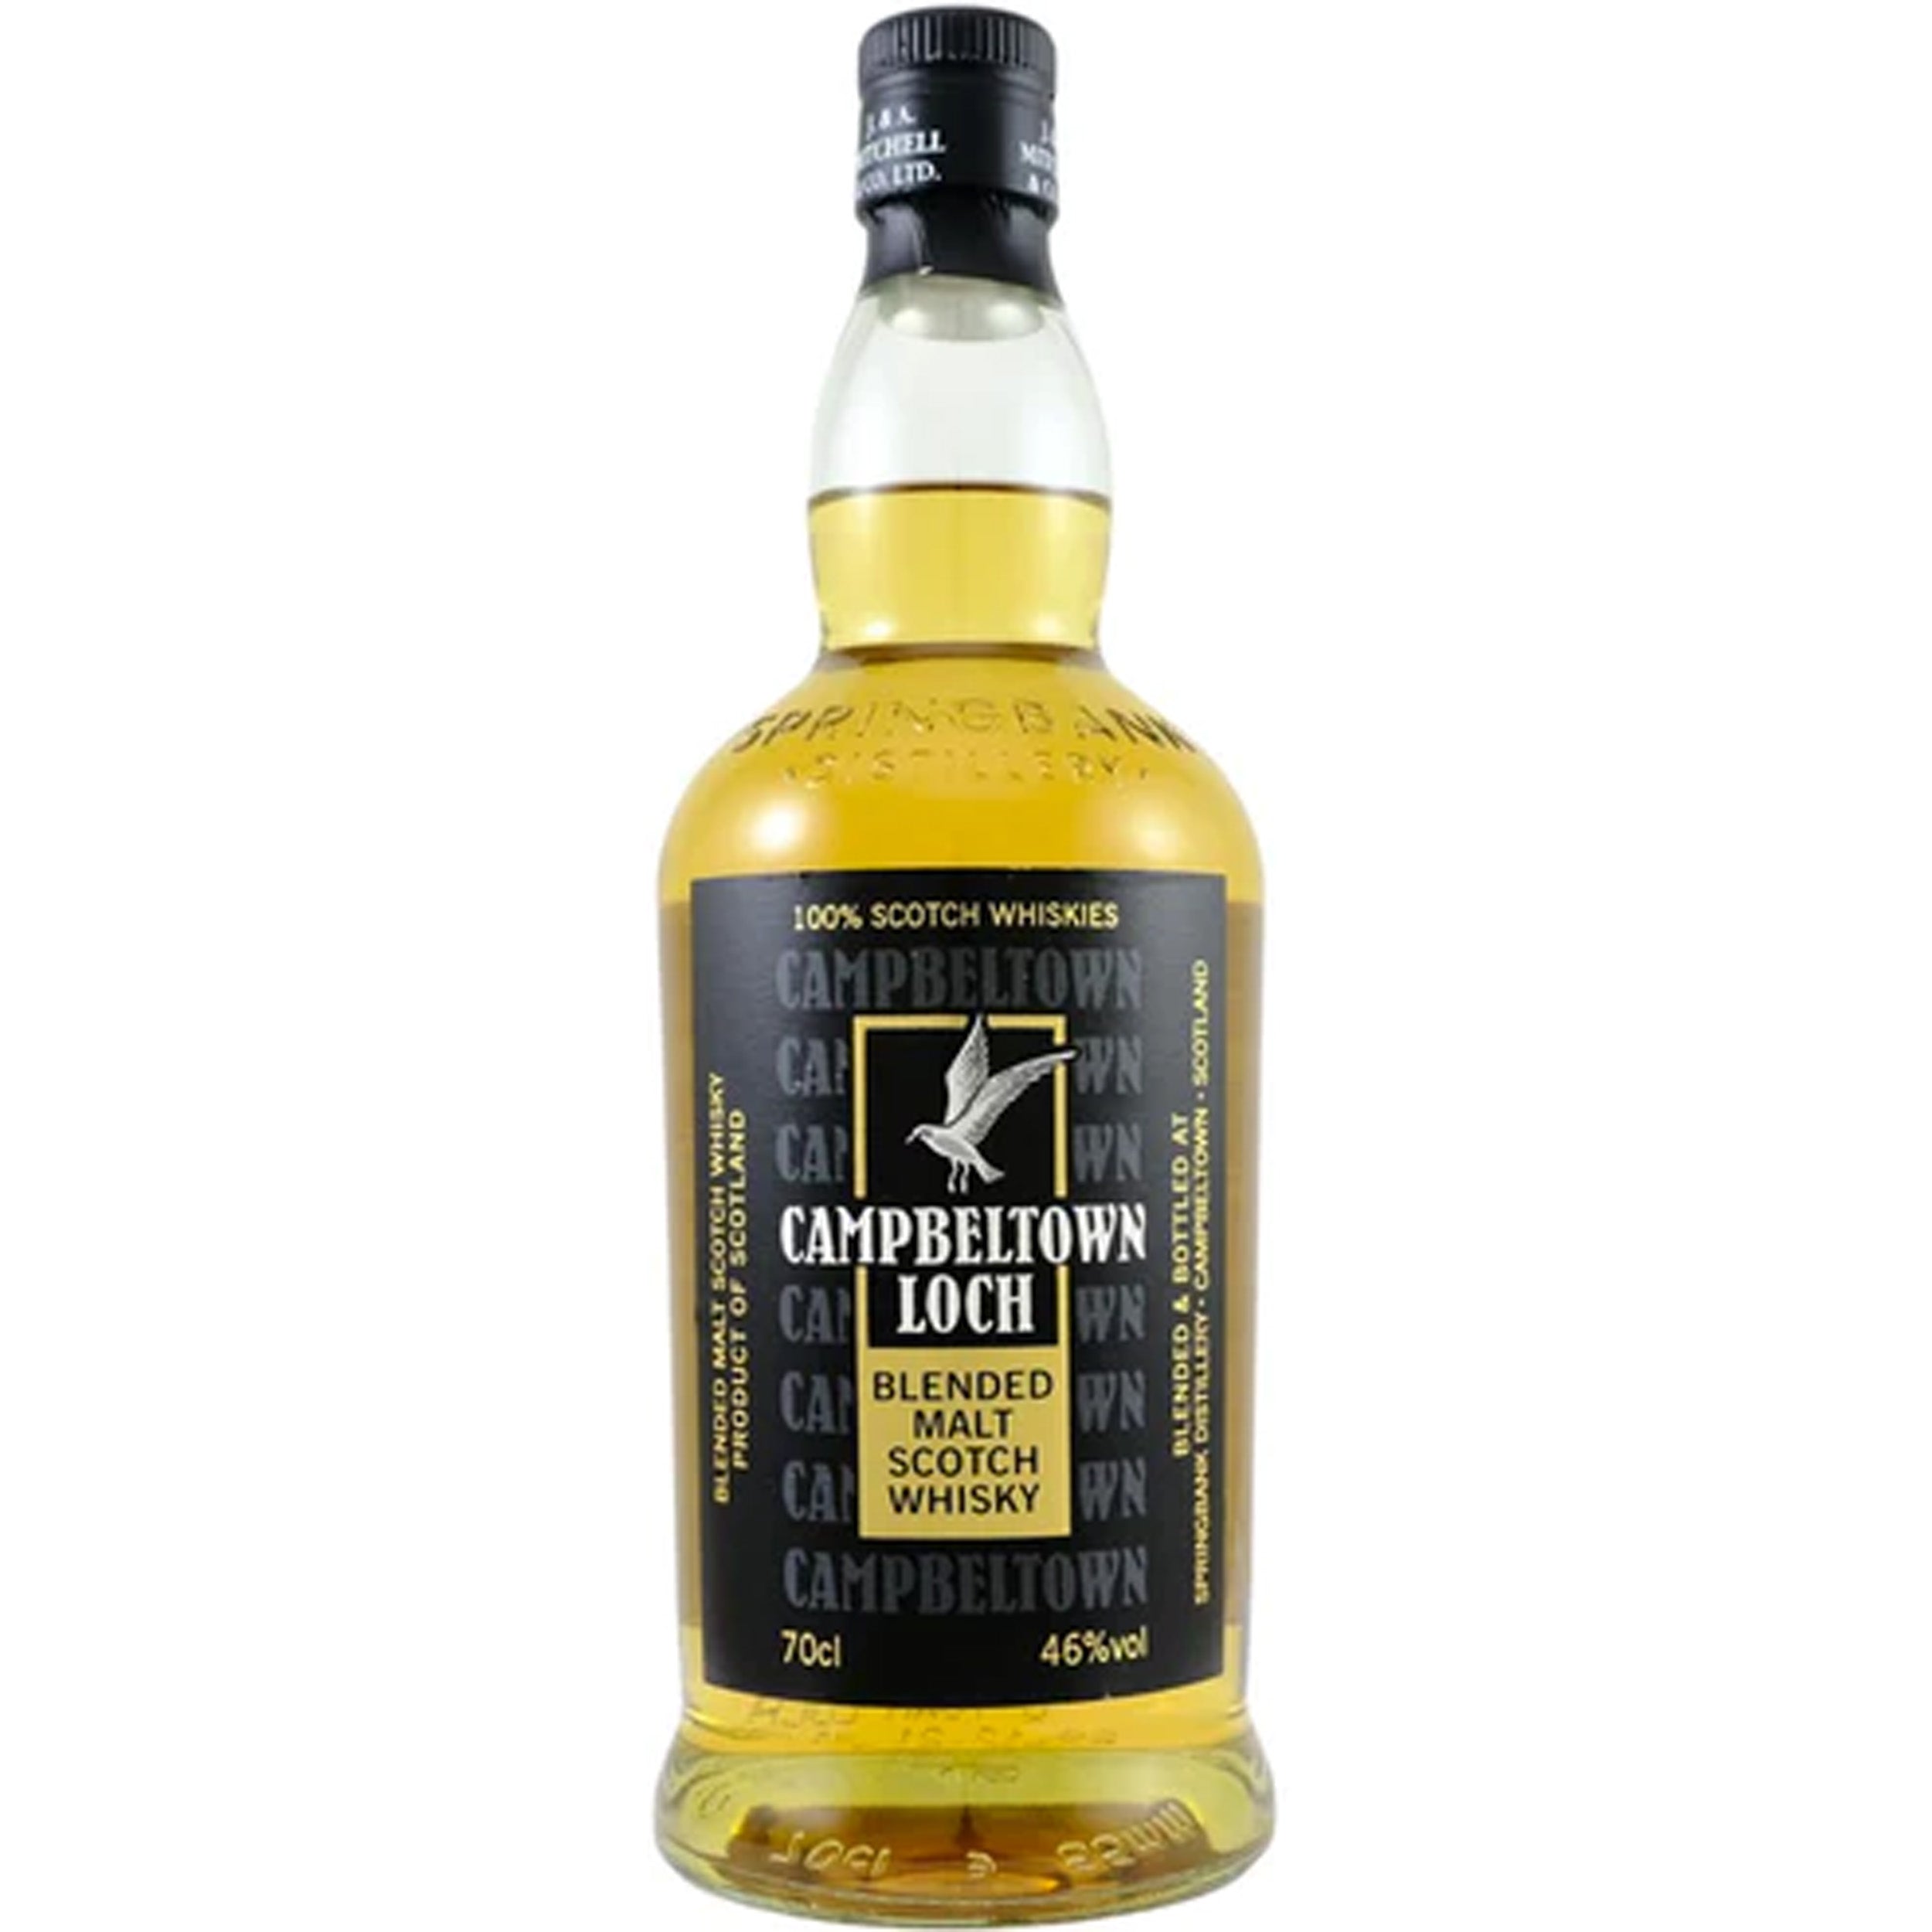 Loch Chips Campbeltown – Blended Scotch Malt Whisky Liquor